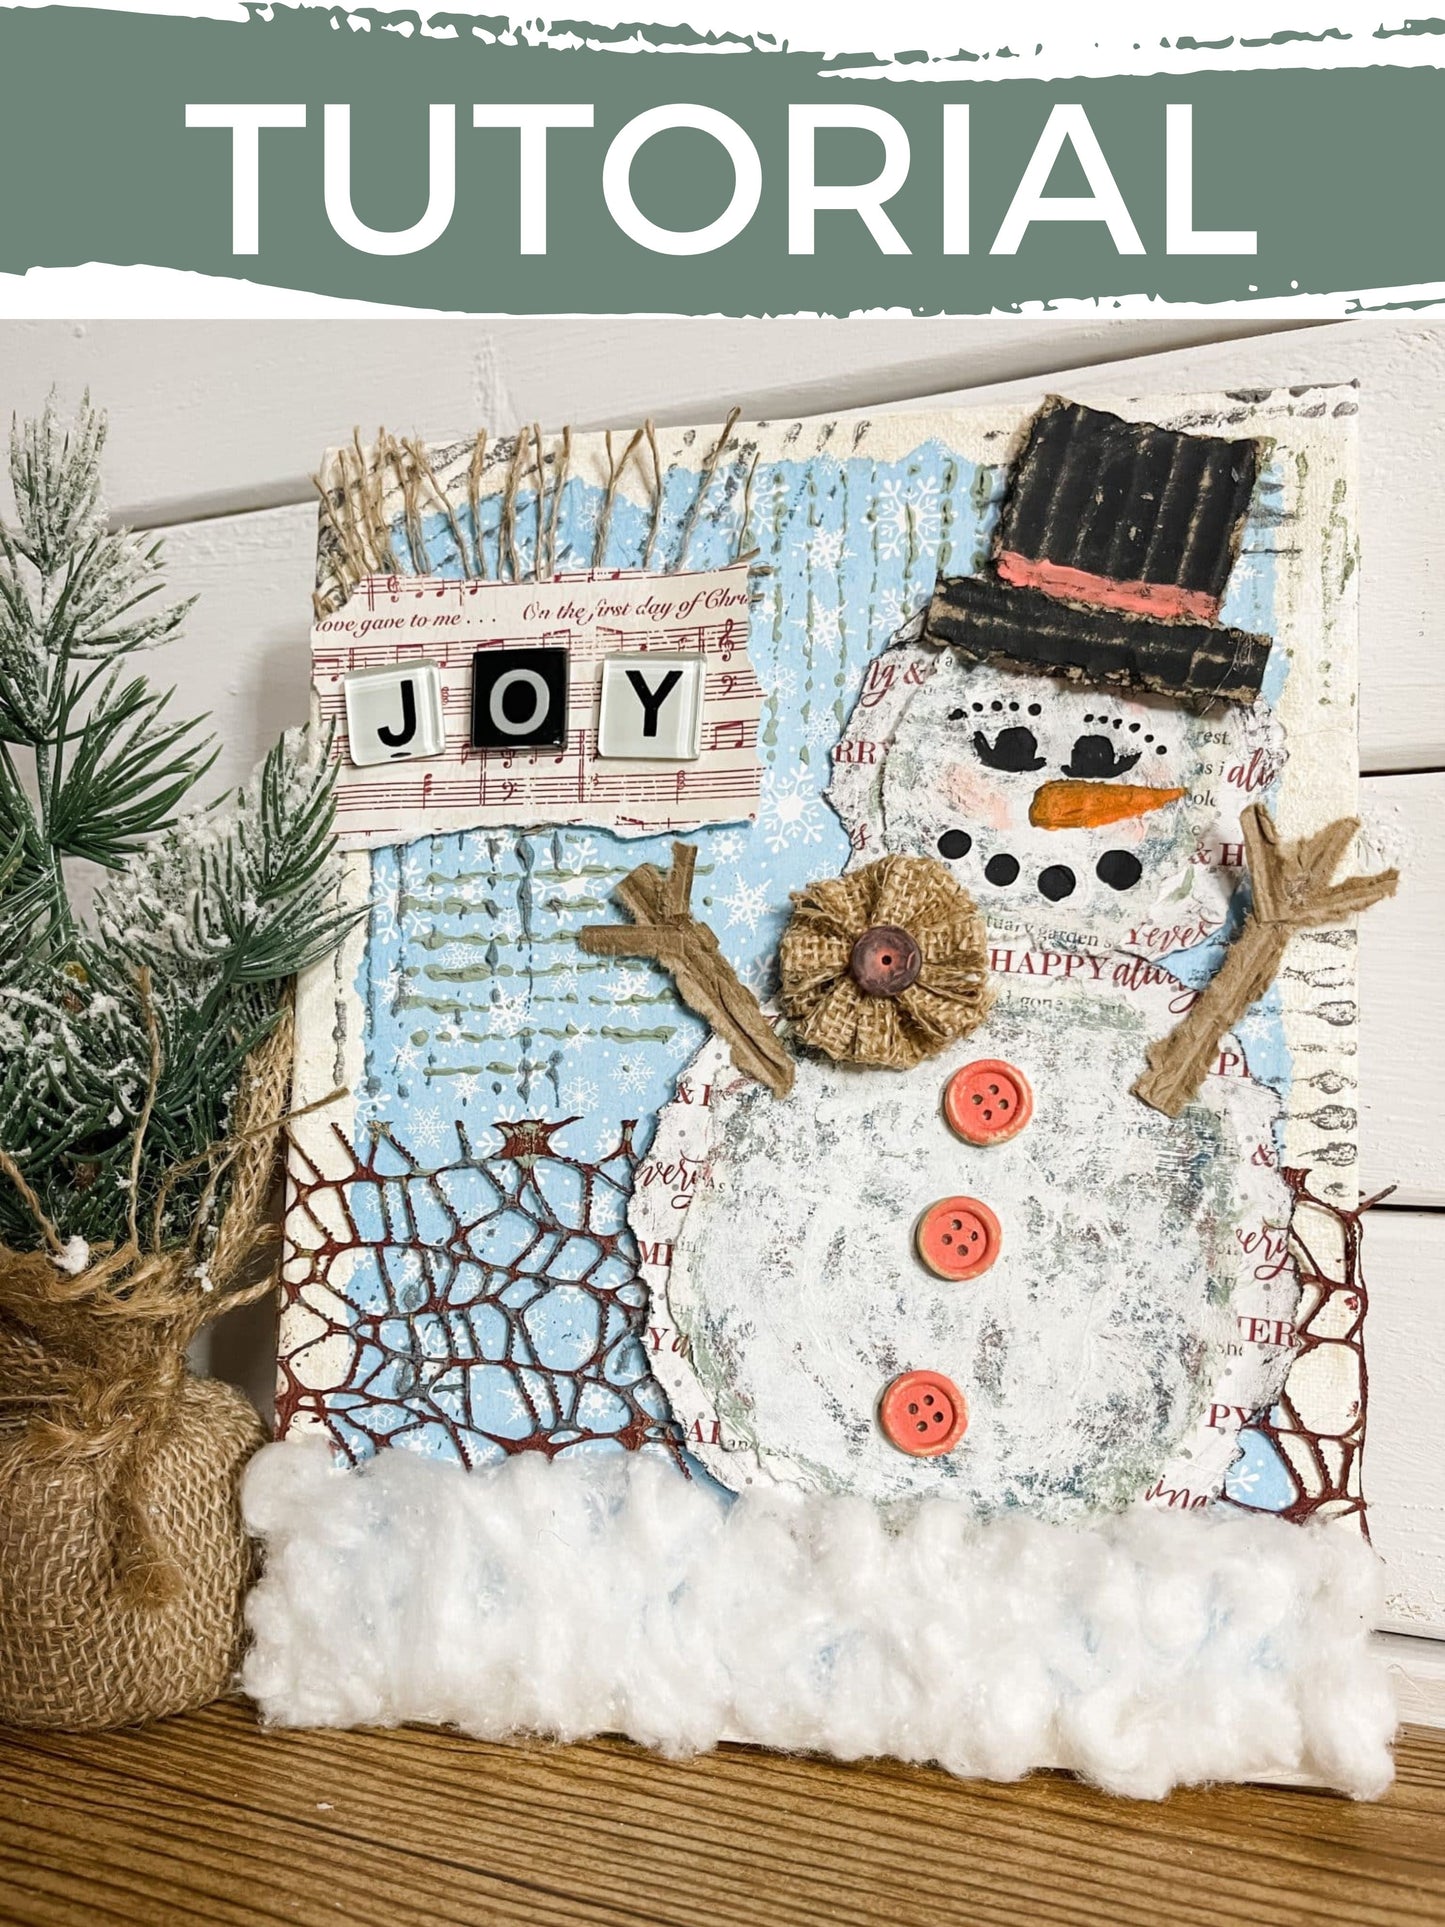 Snowman String Art Kit Christmas String Art DIY Kit Holiday Decor